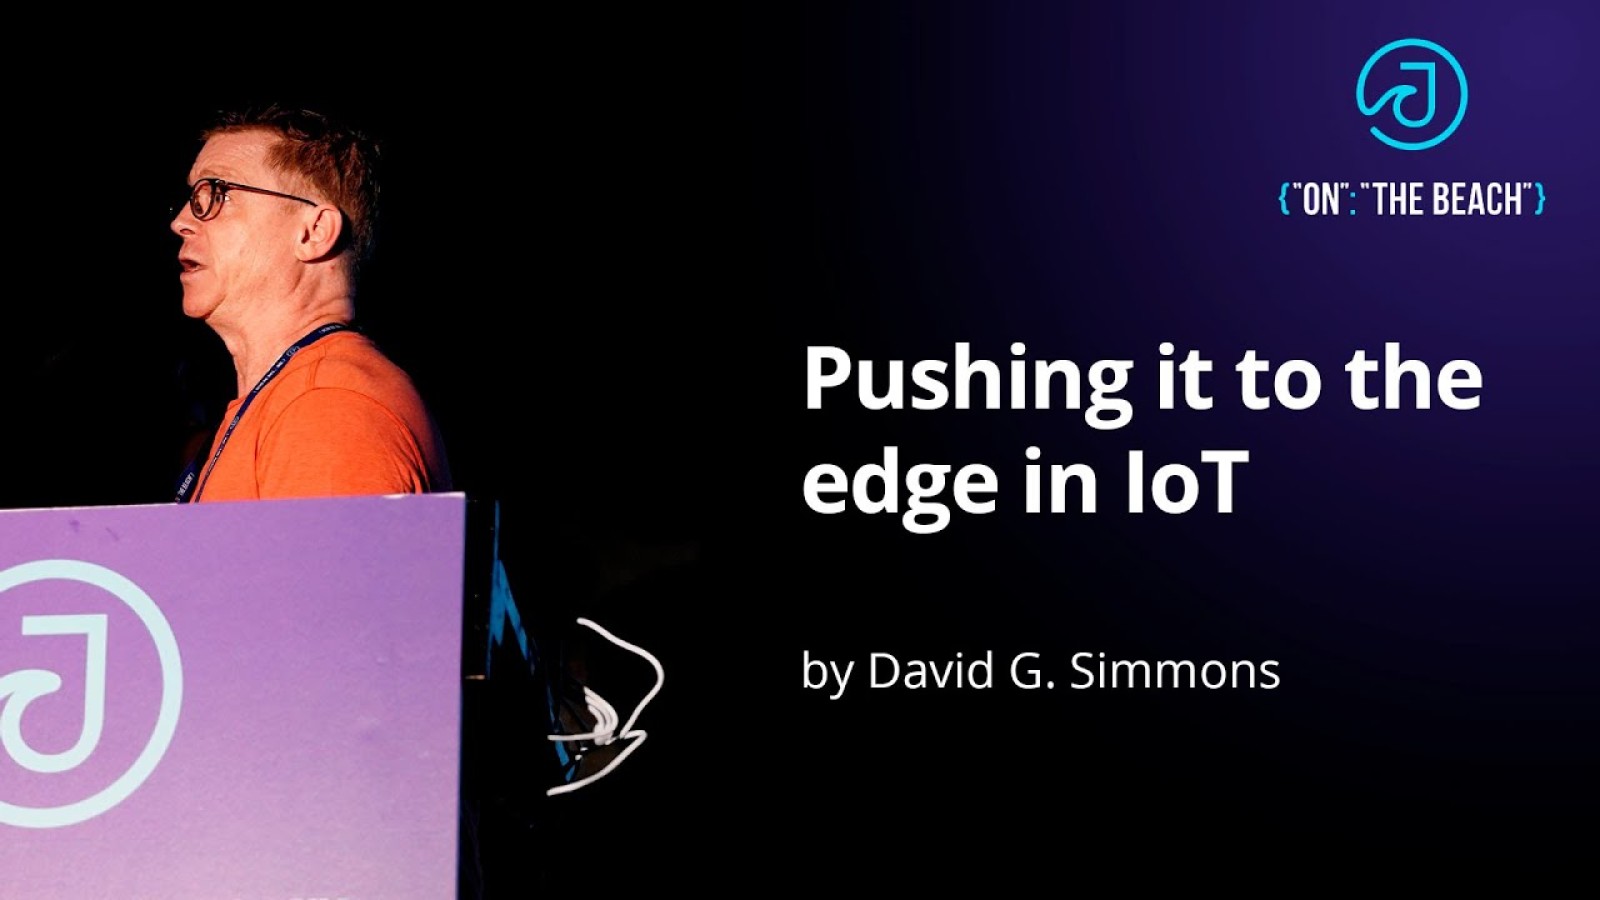 Pushing IoT to the edge